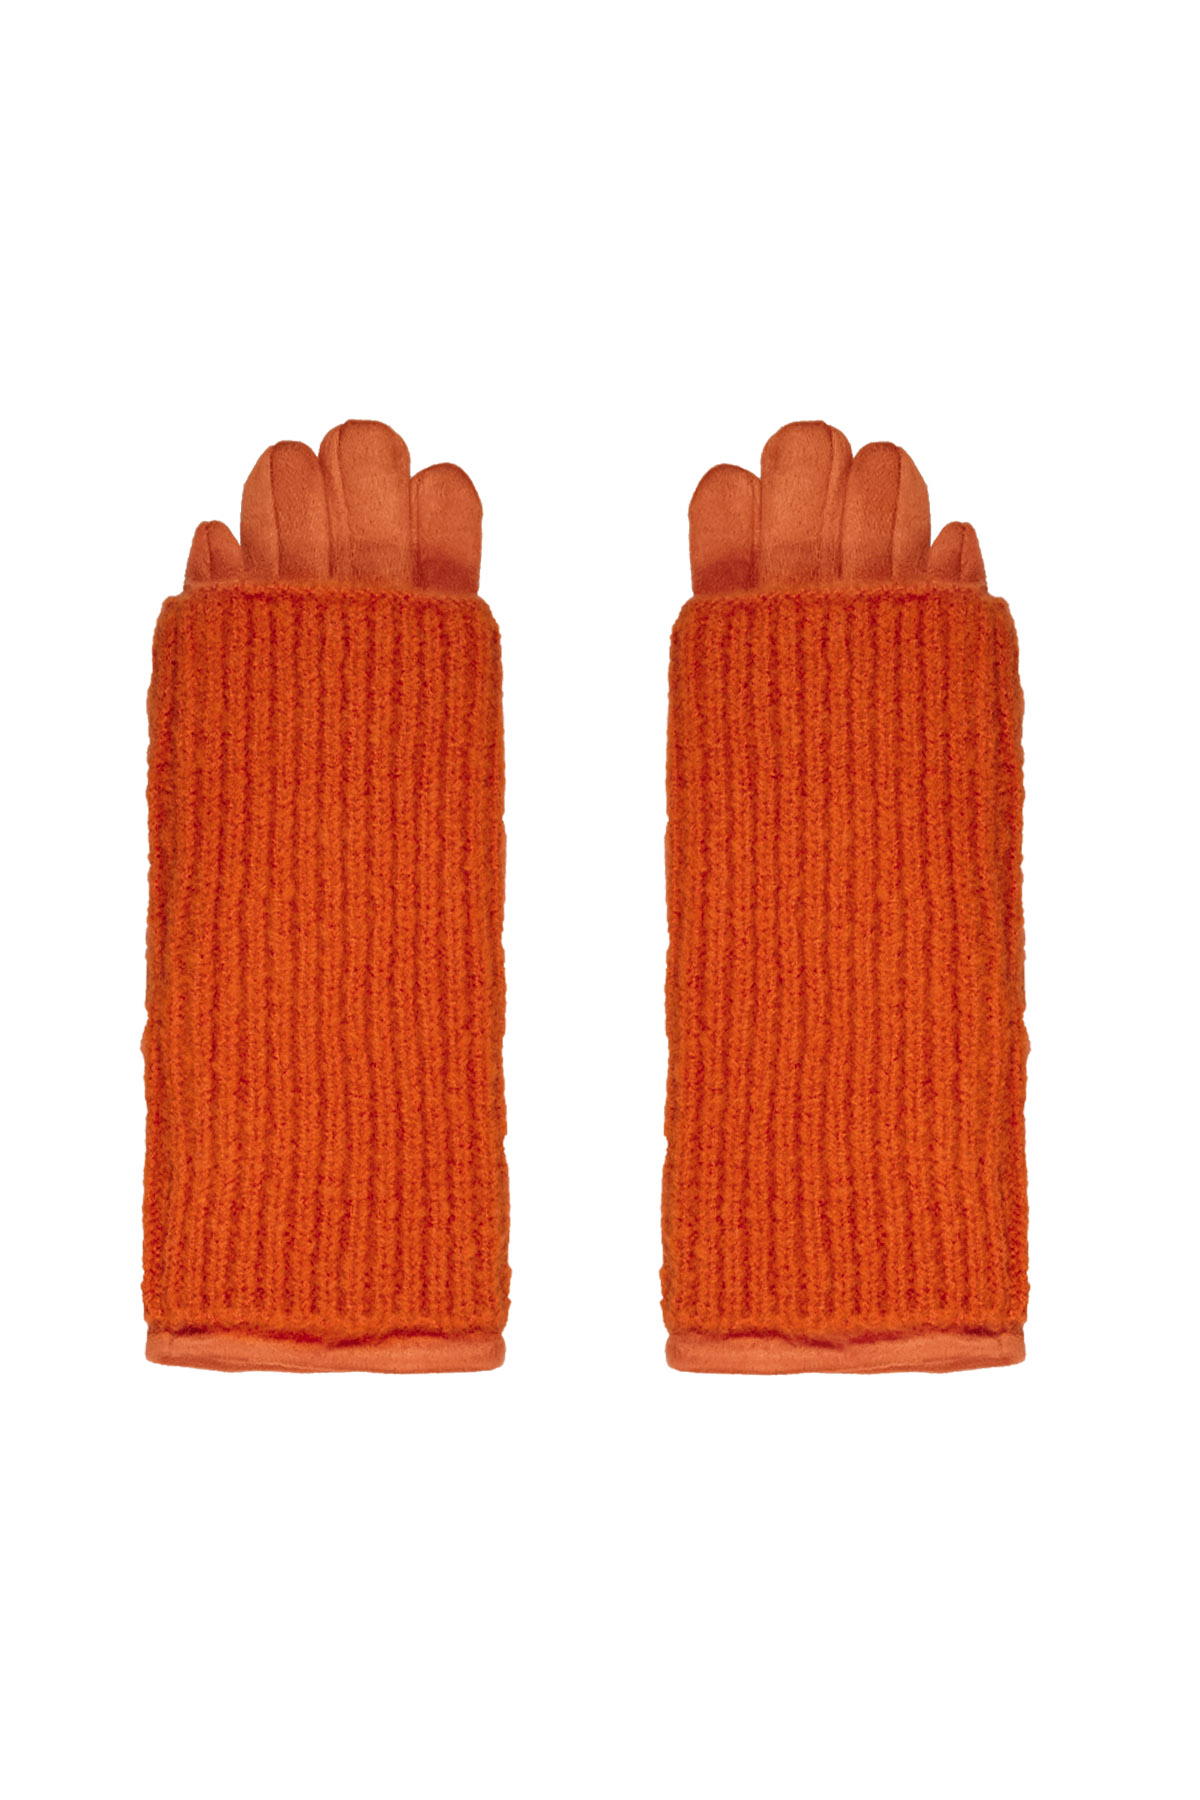 Doppellagige Handschuhe – Orange